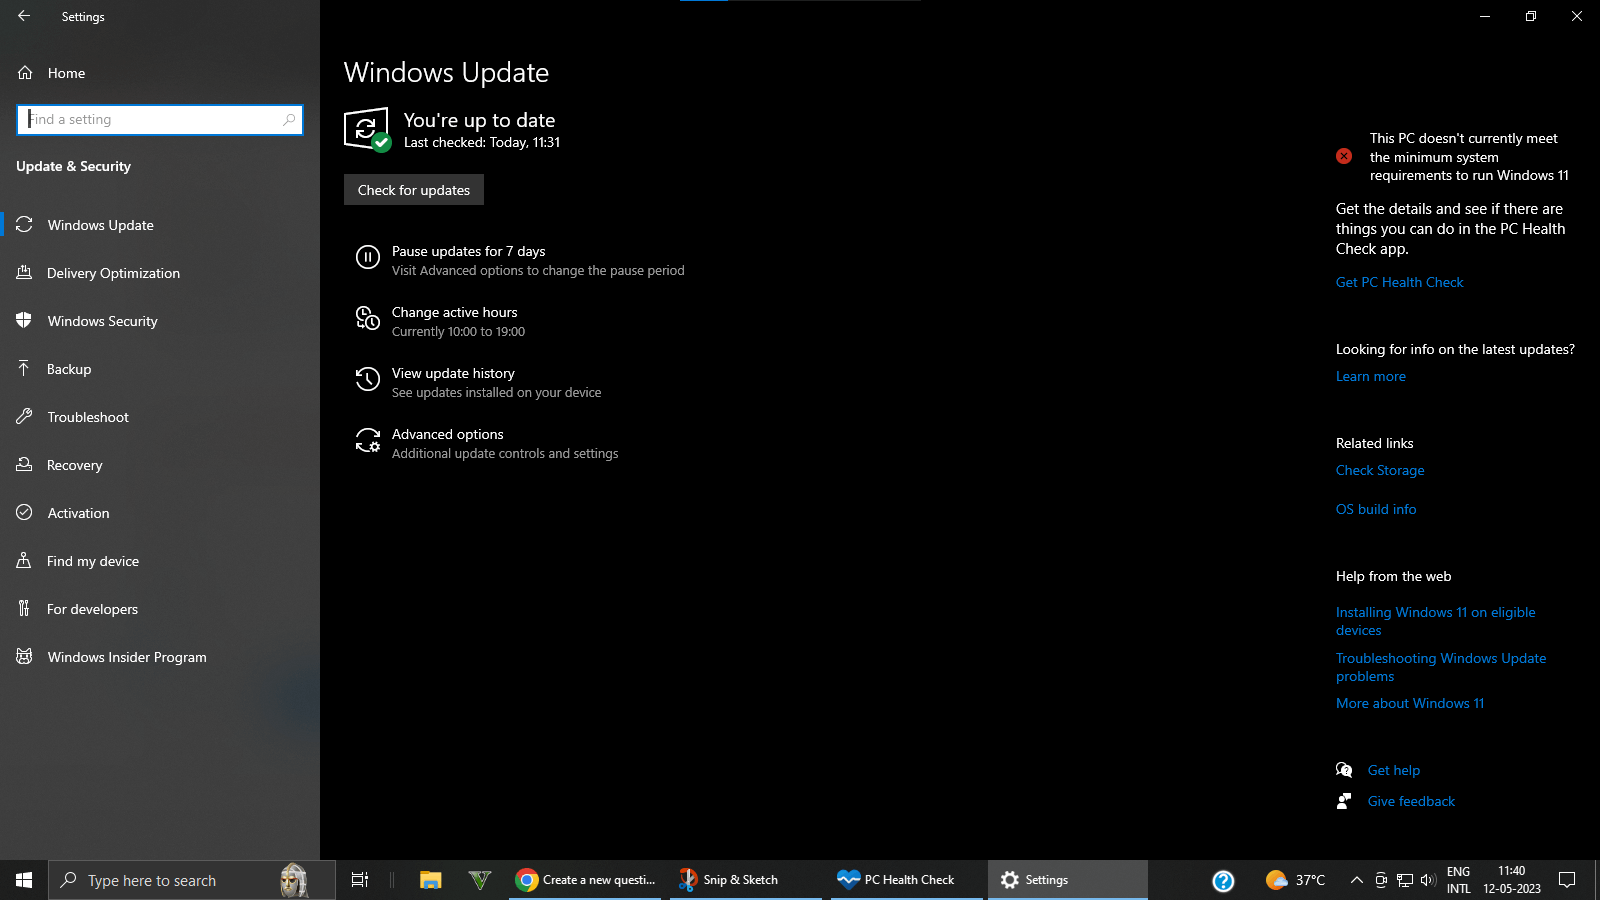 How to Lock Windows 11 PC (4 Ways) - Microsoft Community Hub